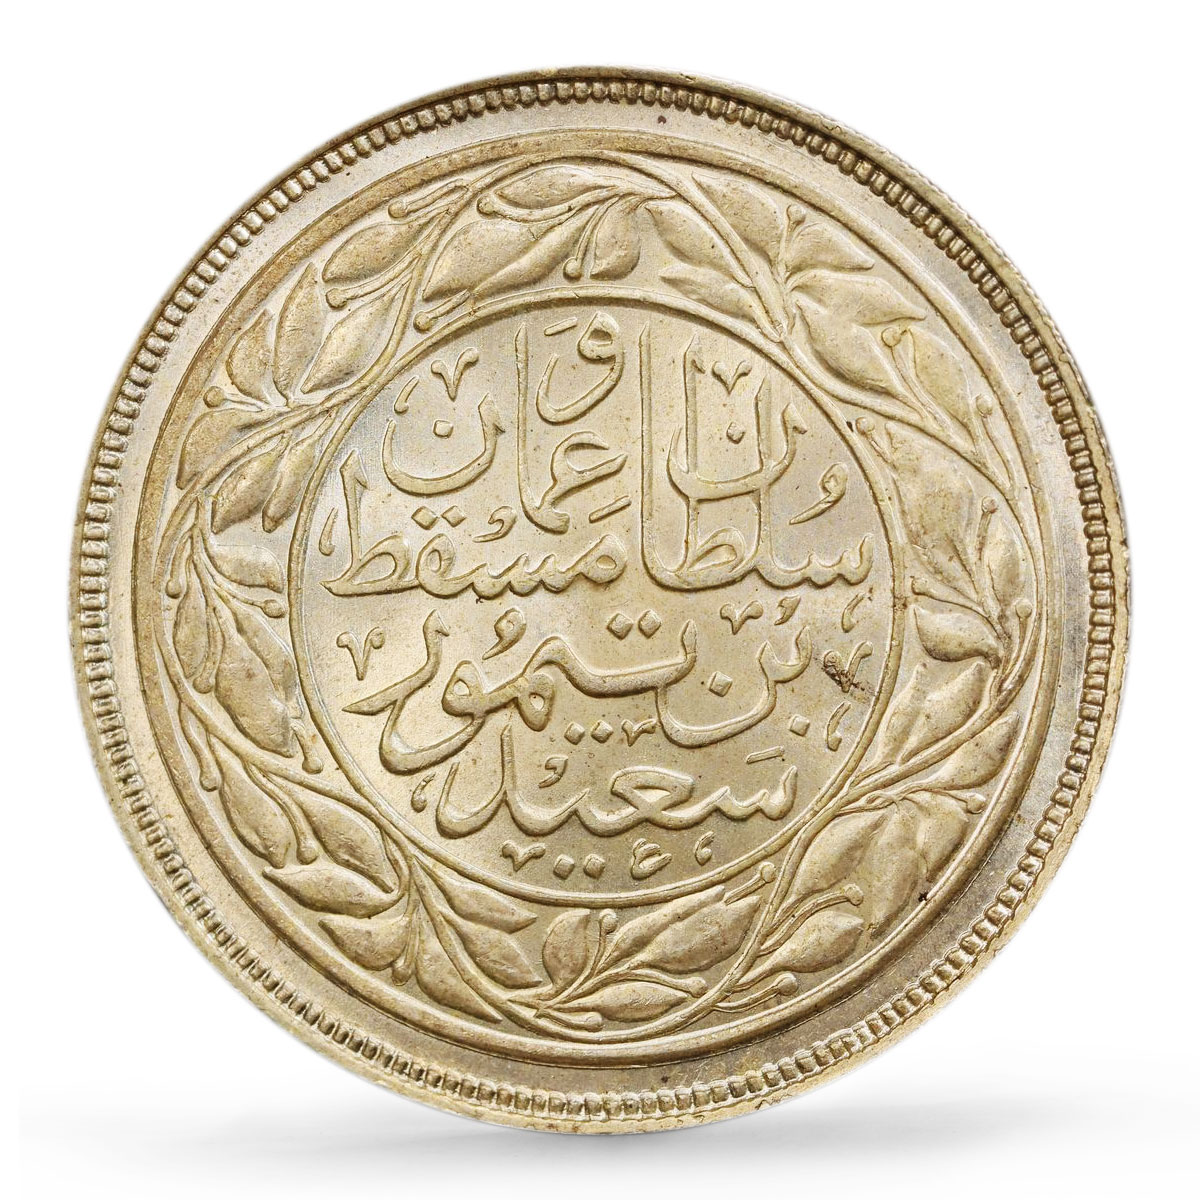 Oman Muscat 1/2 rial Dhofari Said Half Rial KM-29 MS64 PCGS silver coin 1947